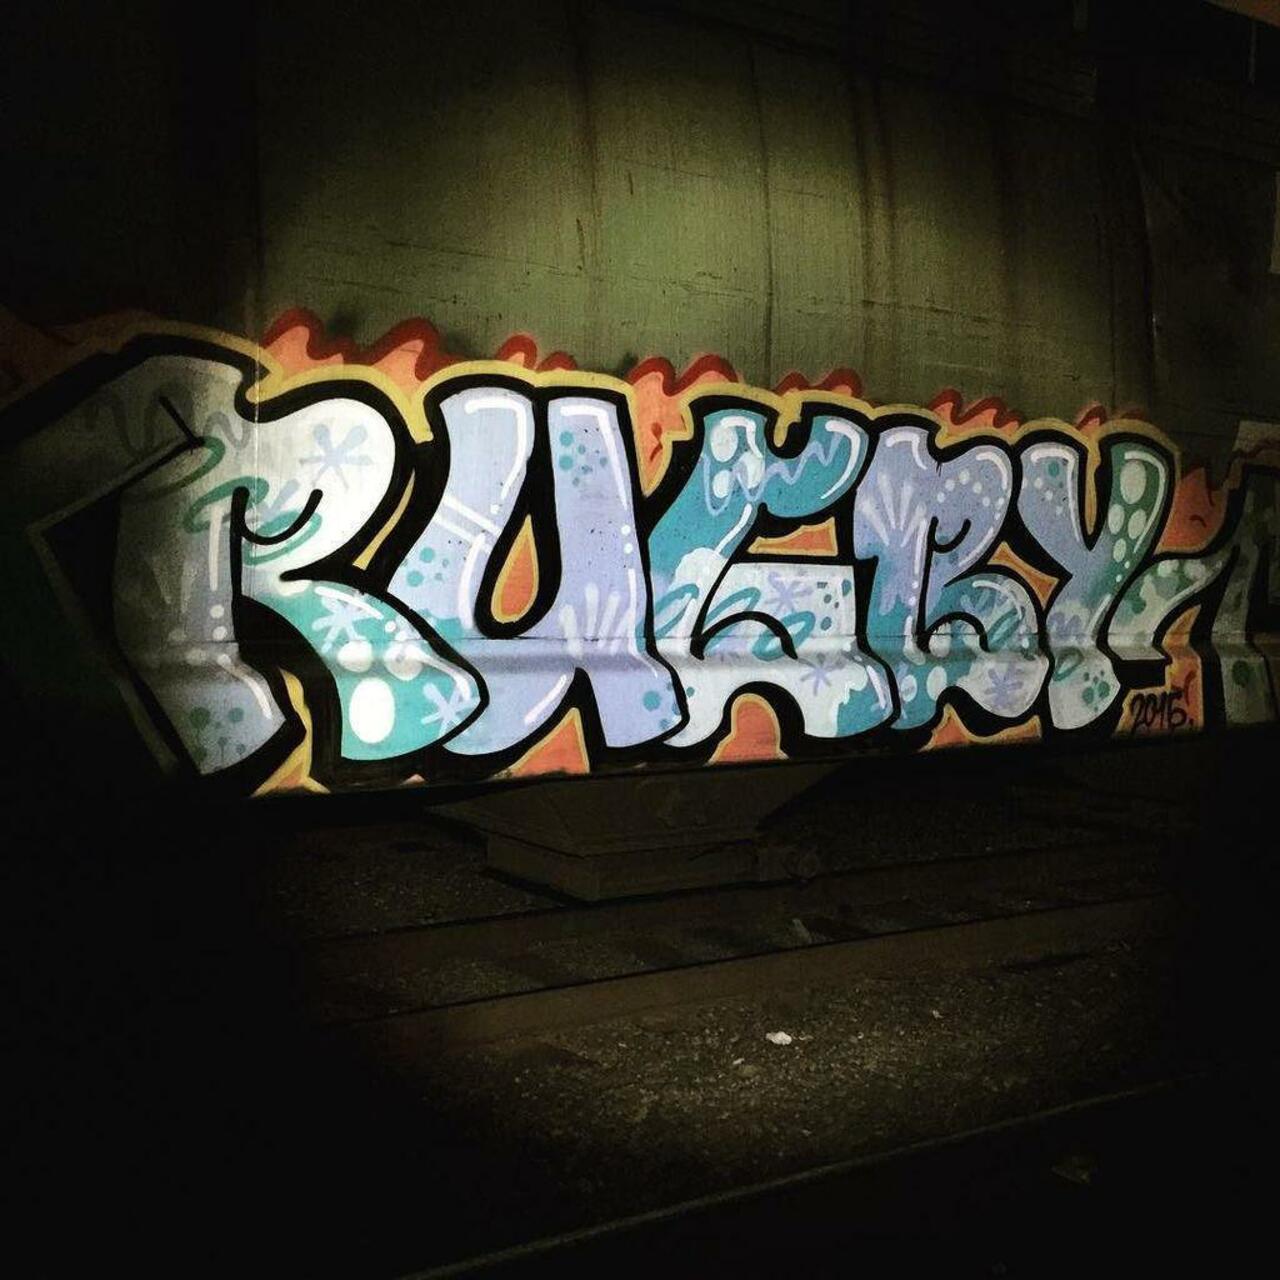 RT artpushr: via #jeepit11 "http://bit.ly/1JR8We4" #graffiti #streetart http://t.co/aWBWpVVEZ9 https://goo.gl/7kifqw